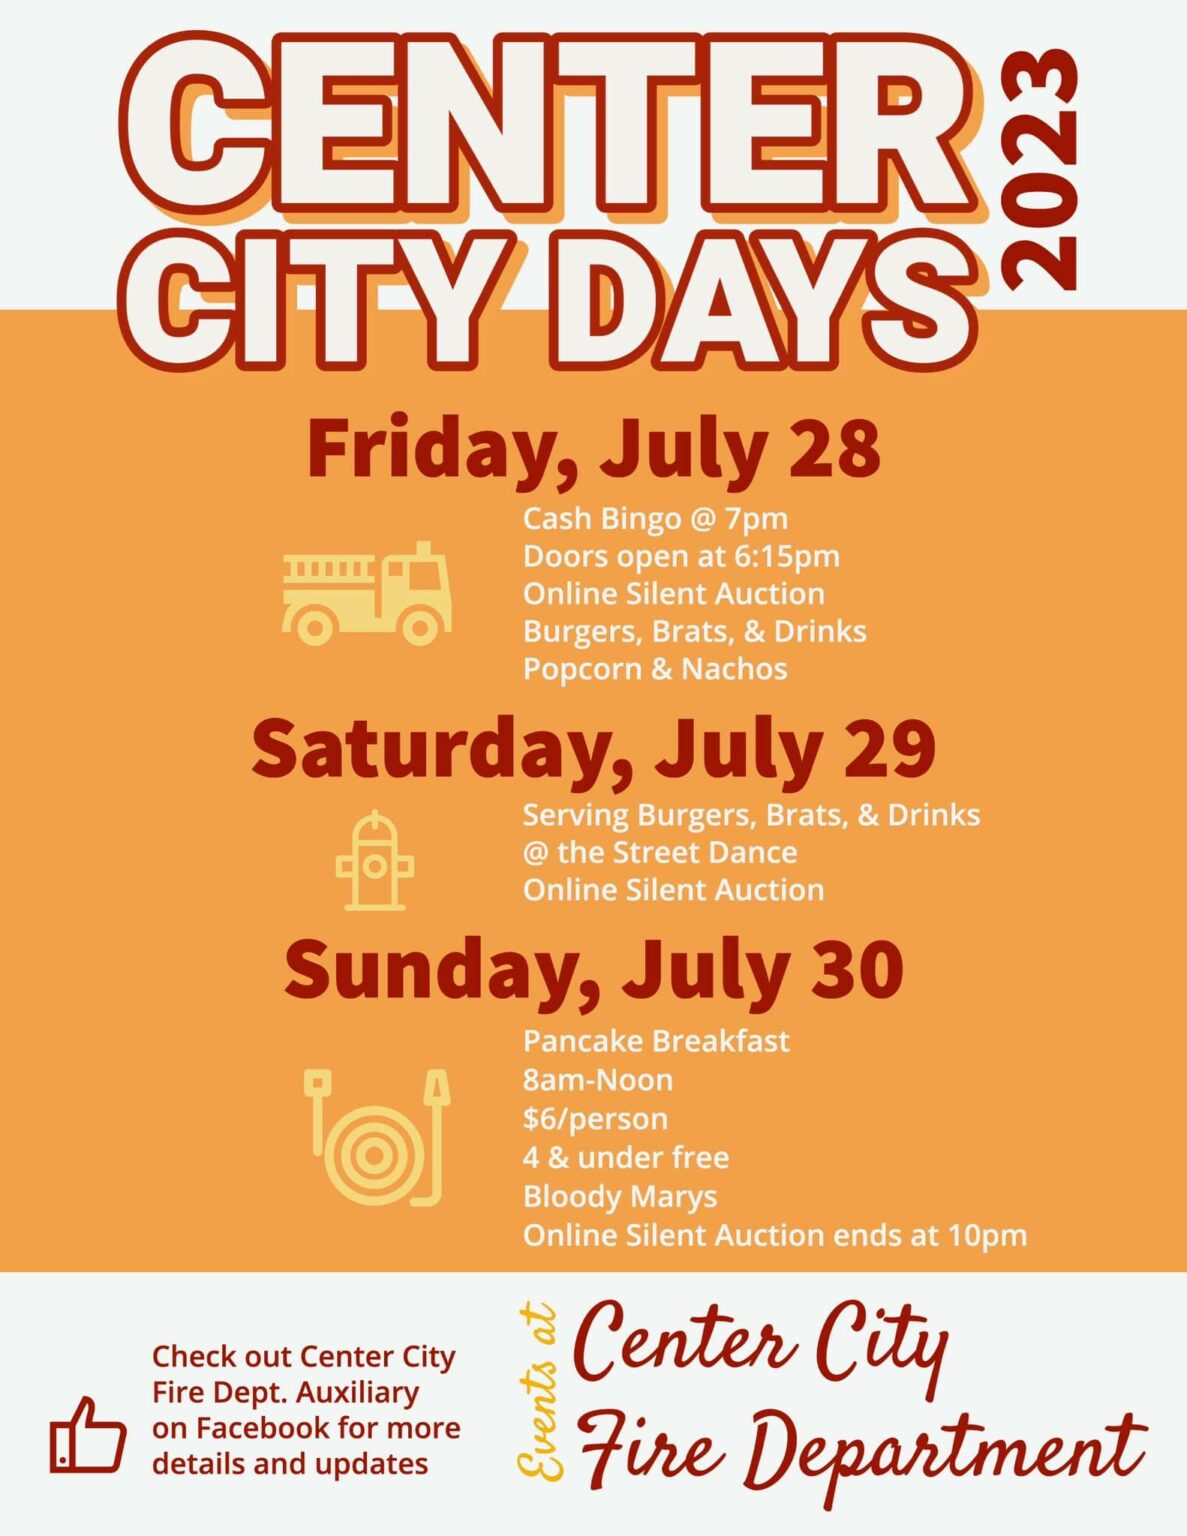 Center City Days Celebration Chisago Lakes Visitor Bureau